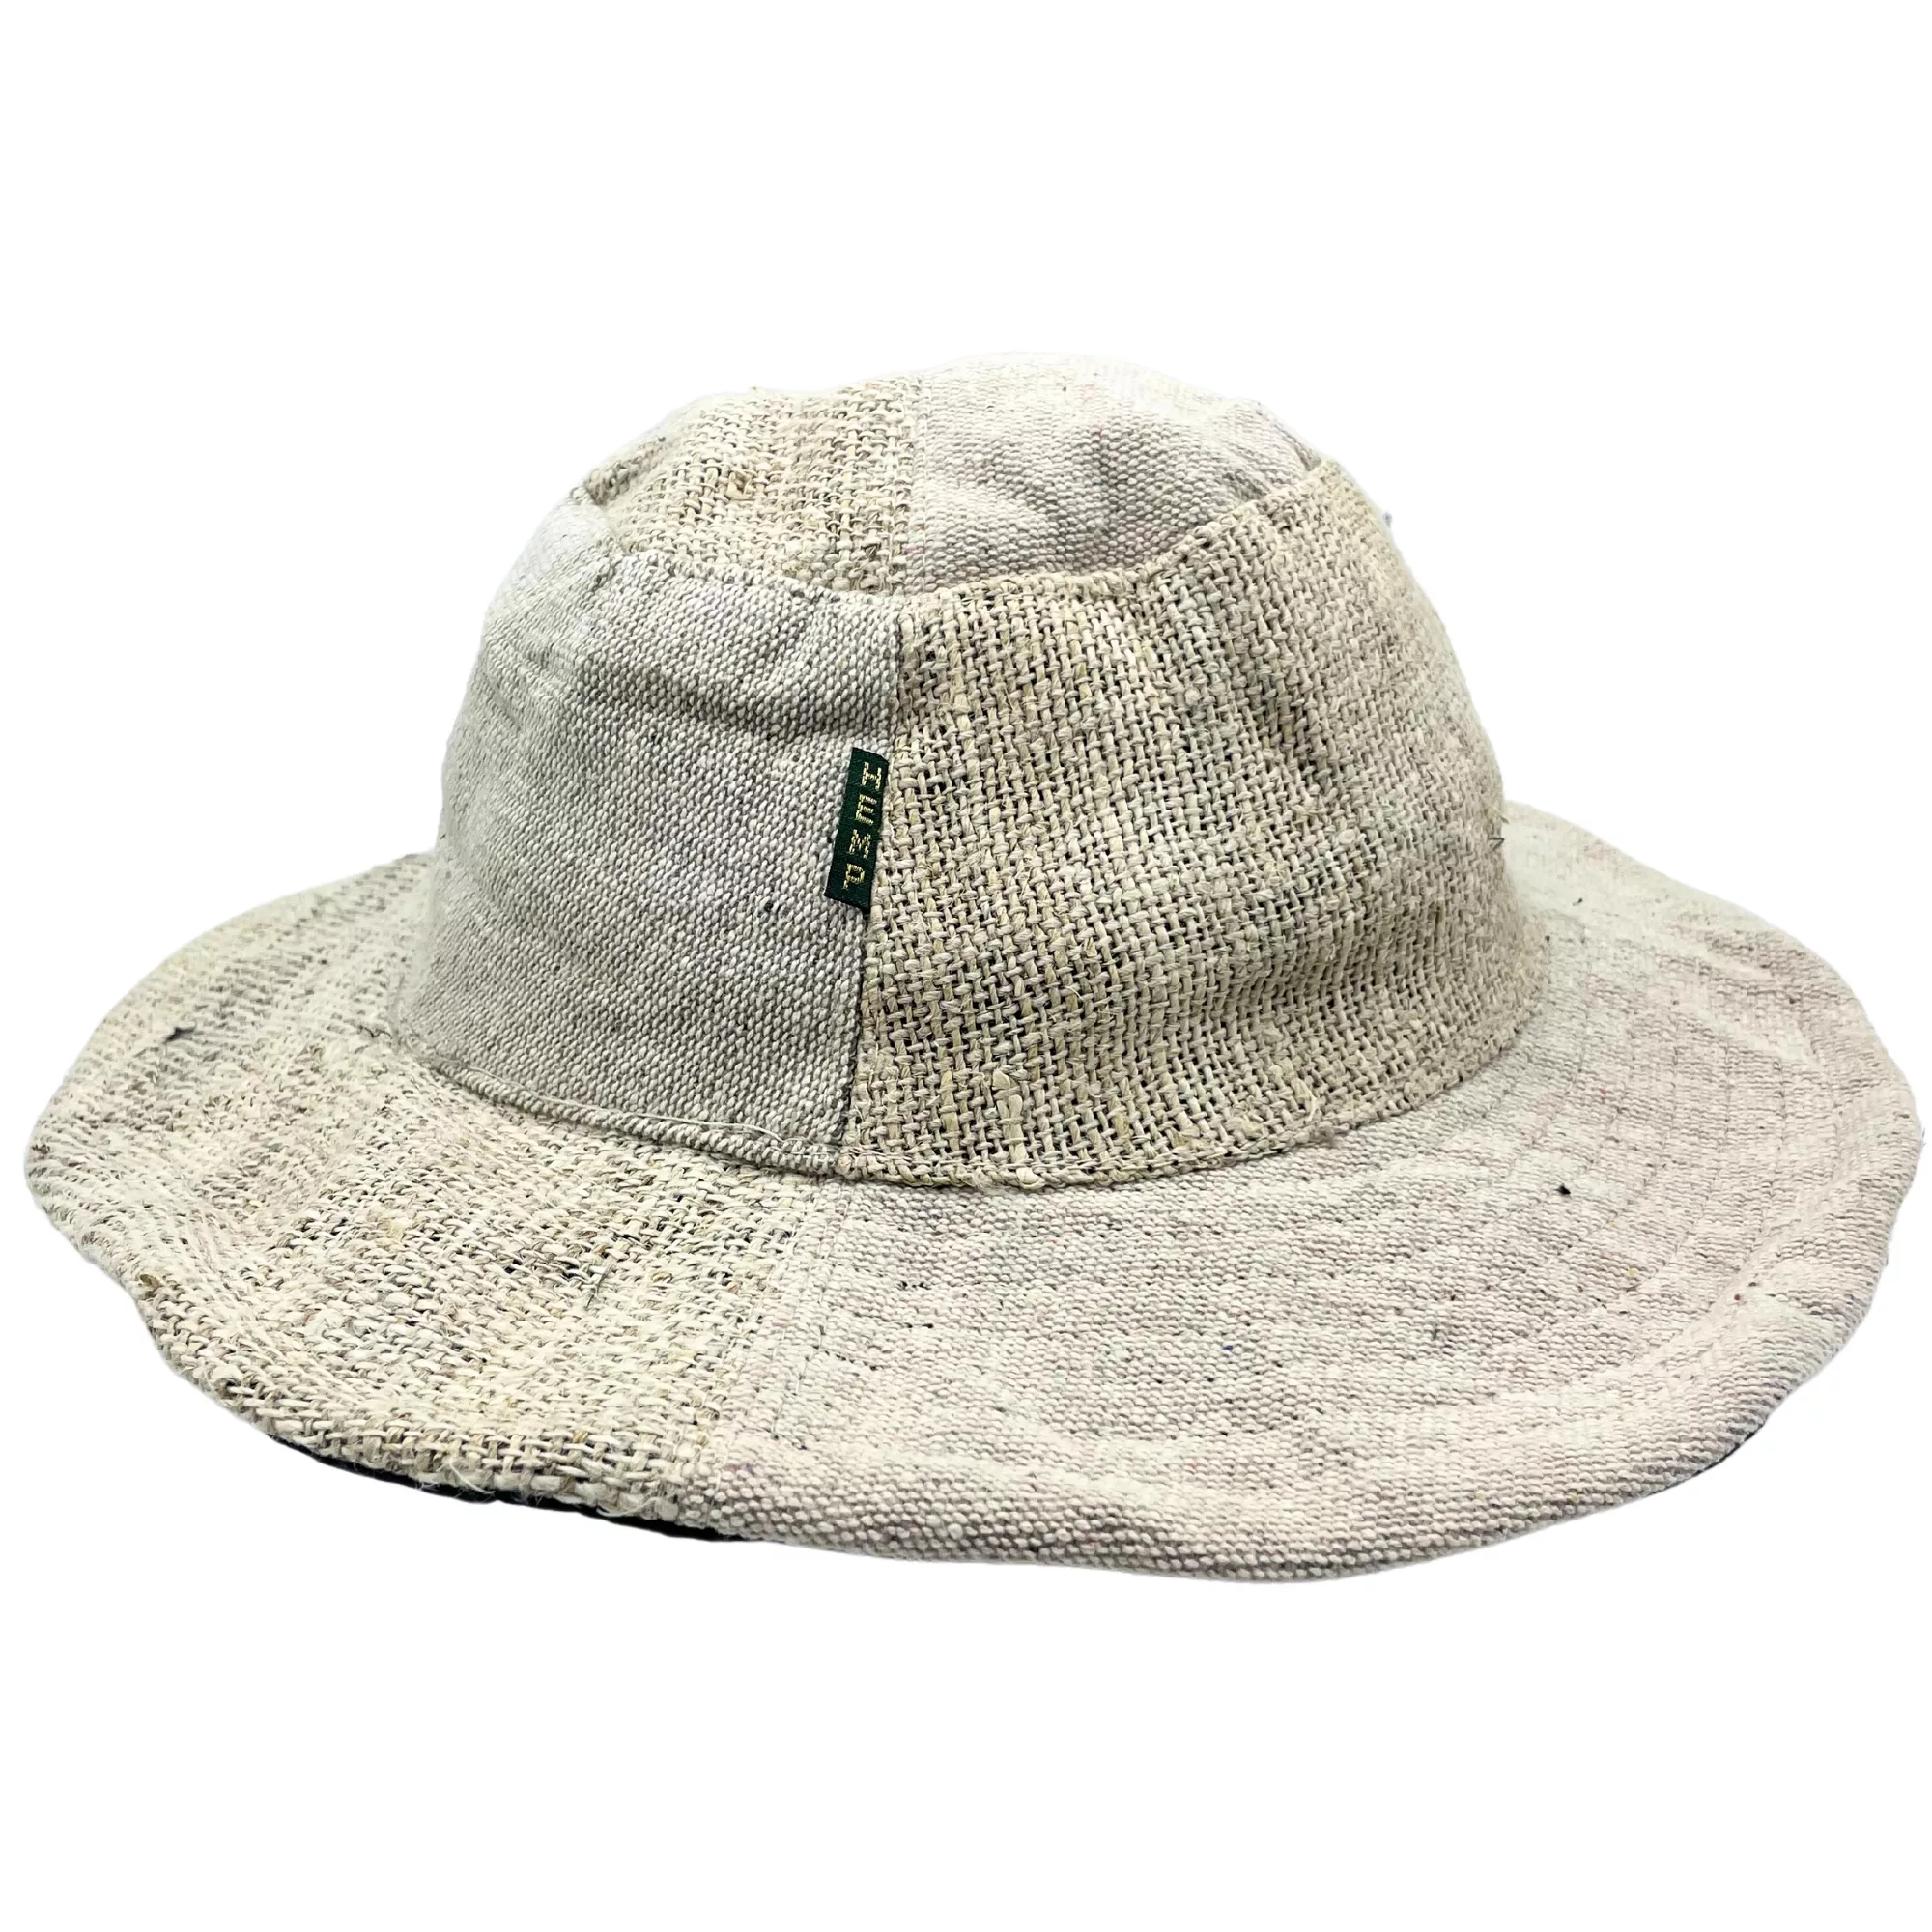 Hemp & Cotton Festival Hats